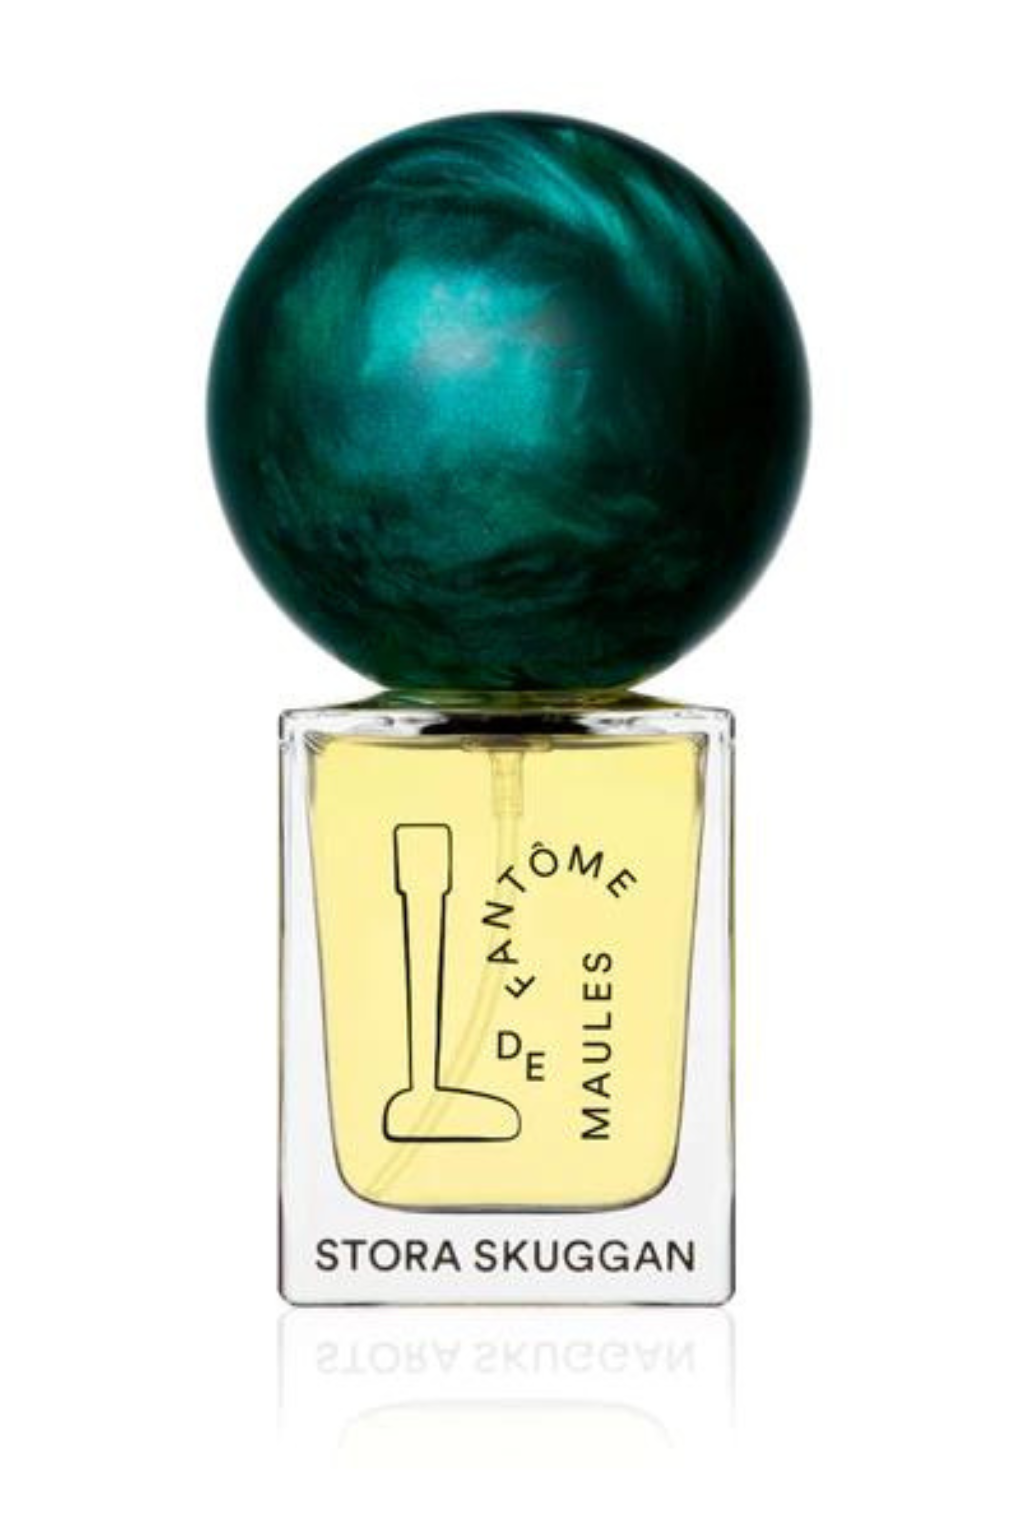 Stora Skuggan Fantome de Maules Perfume 30 ml